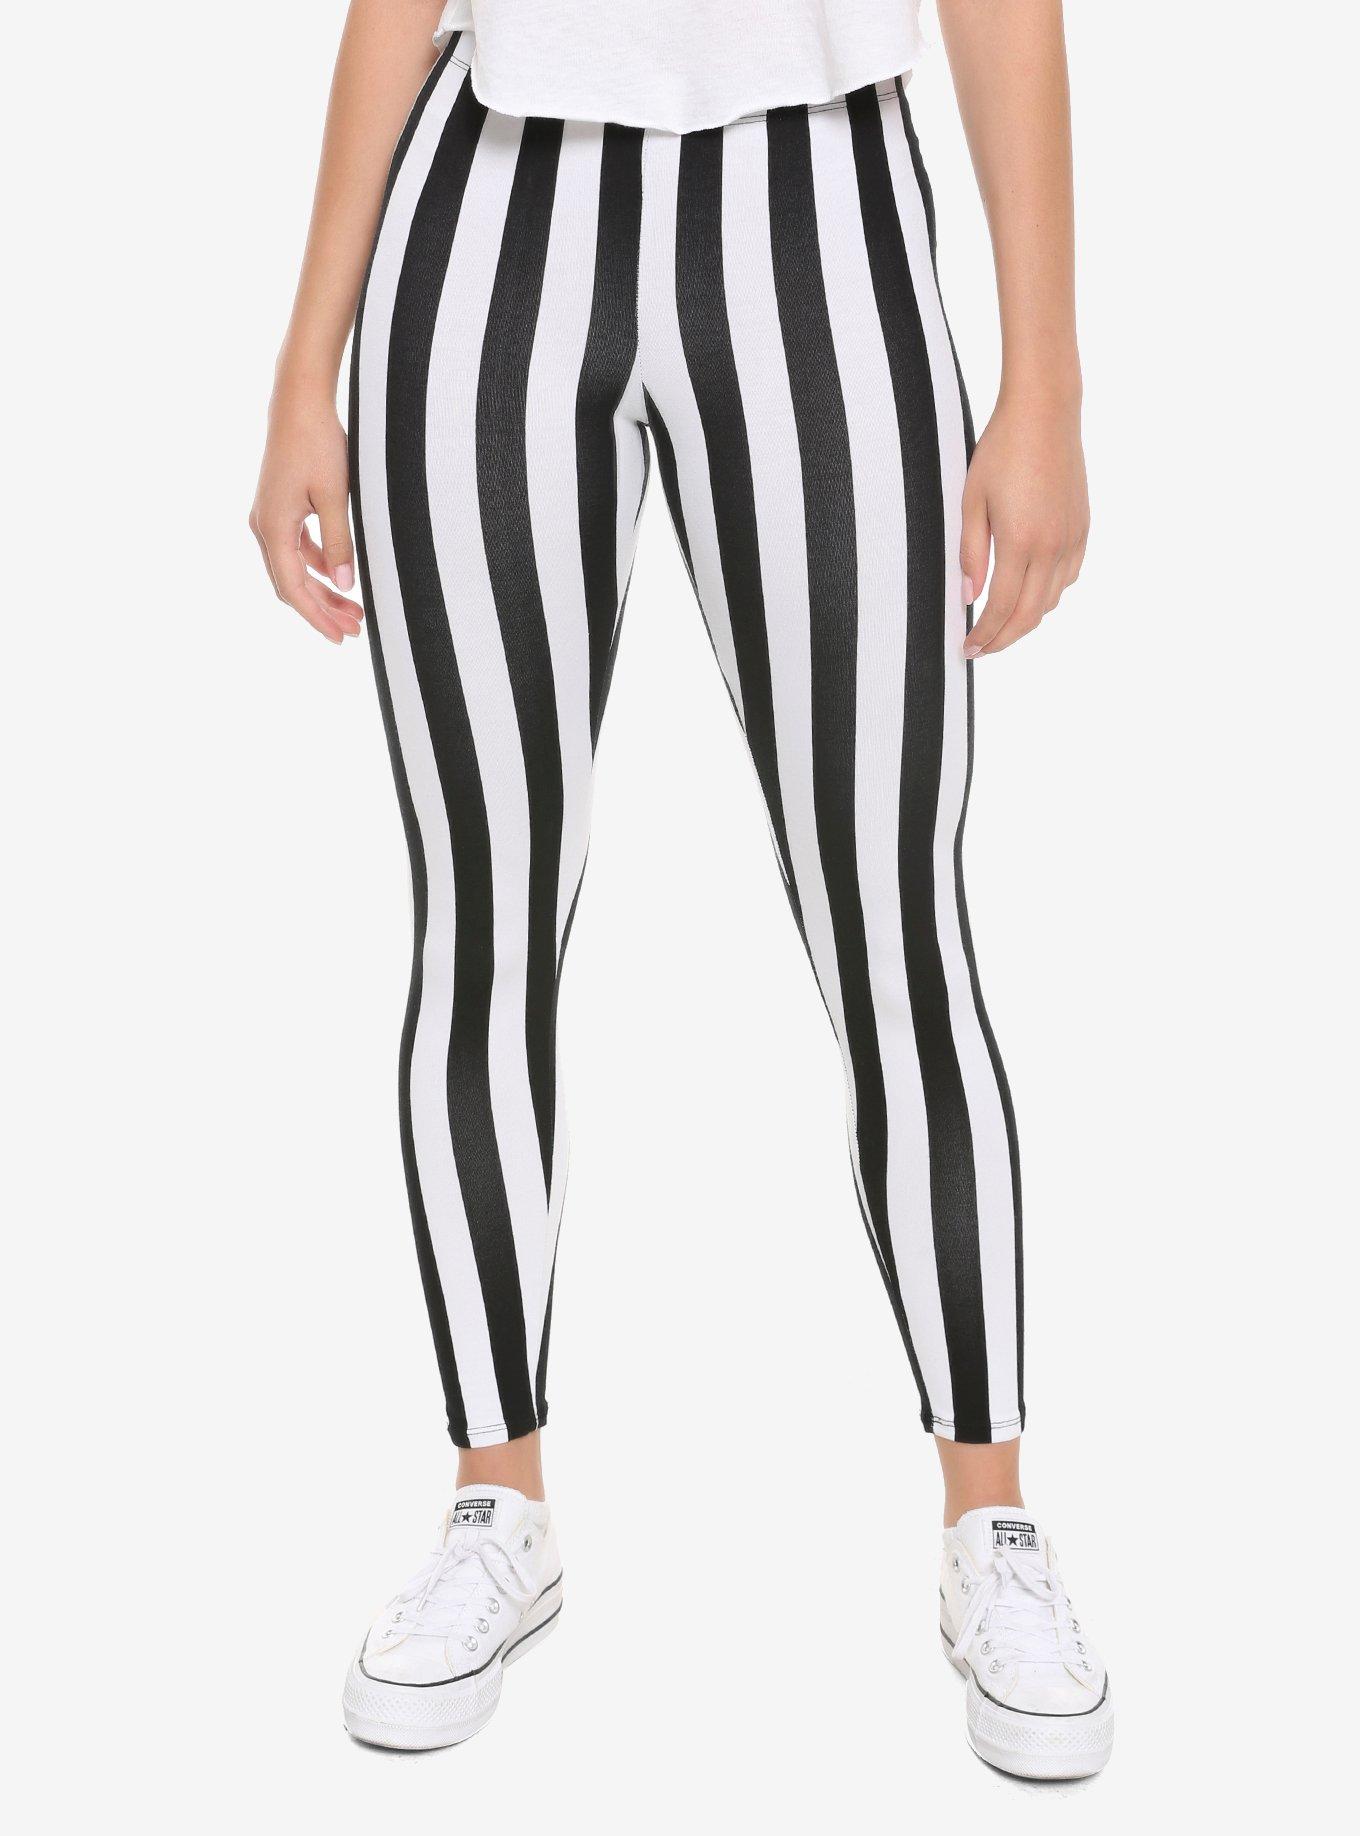 Black & White Vertical Striped Leggings, BLACK  WHITE, hi-res